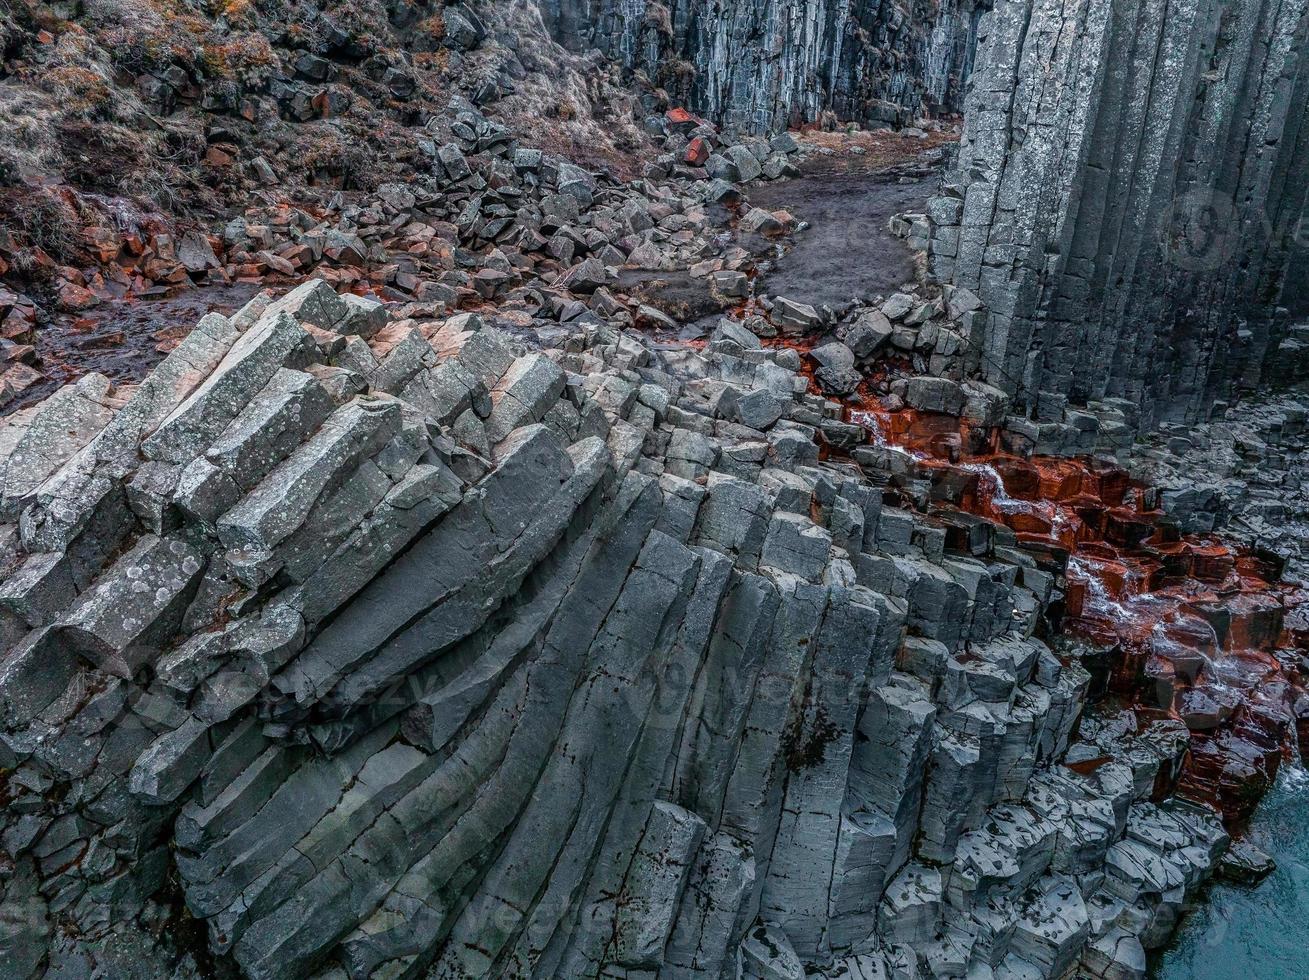 vista épica do cânion de basalto studlagil, islândia. foto